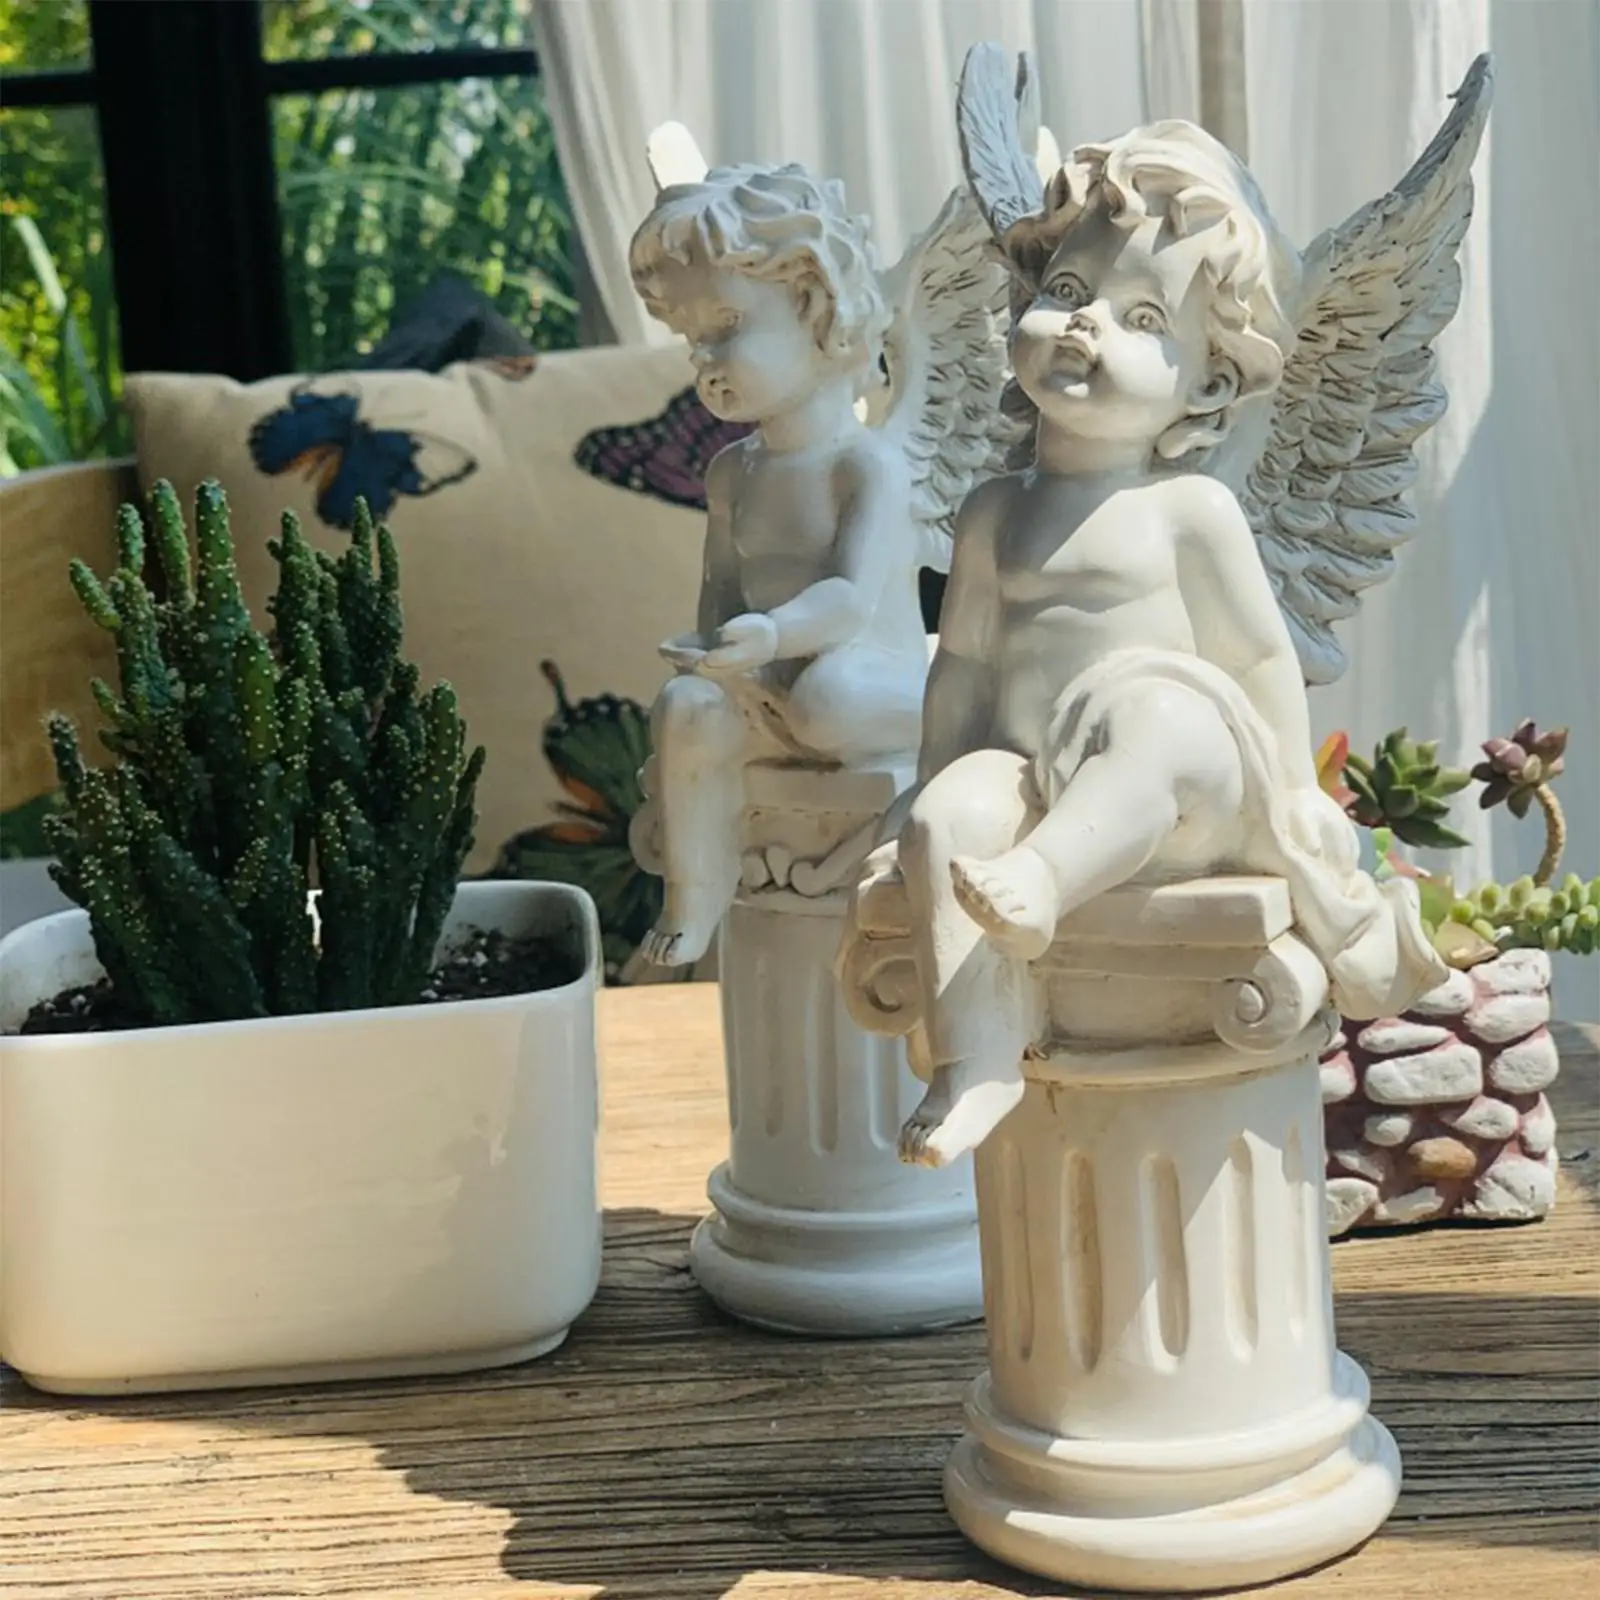 2 Pieces Cute Cherub Statues Roman Pillar Memorial Props Garden Figurines for Indoor Outdoor Wedding Yard Landscaping Fountain